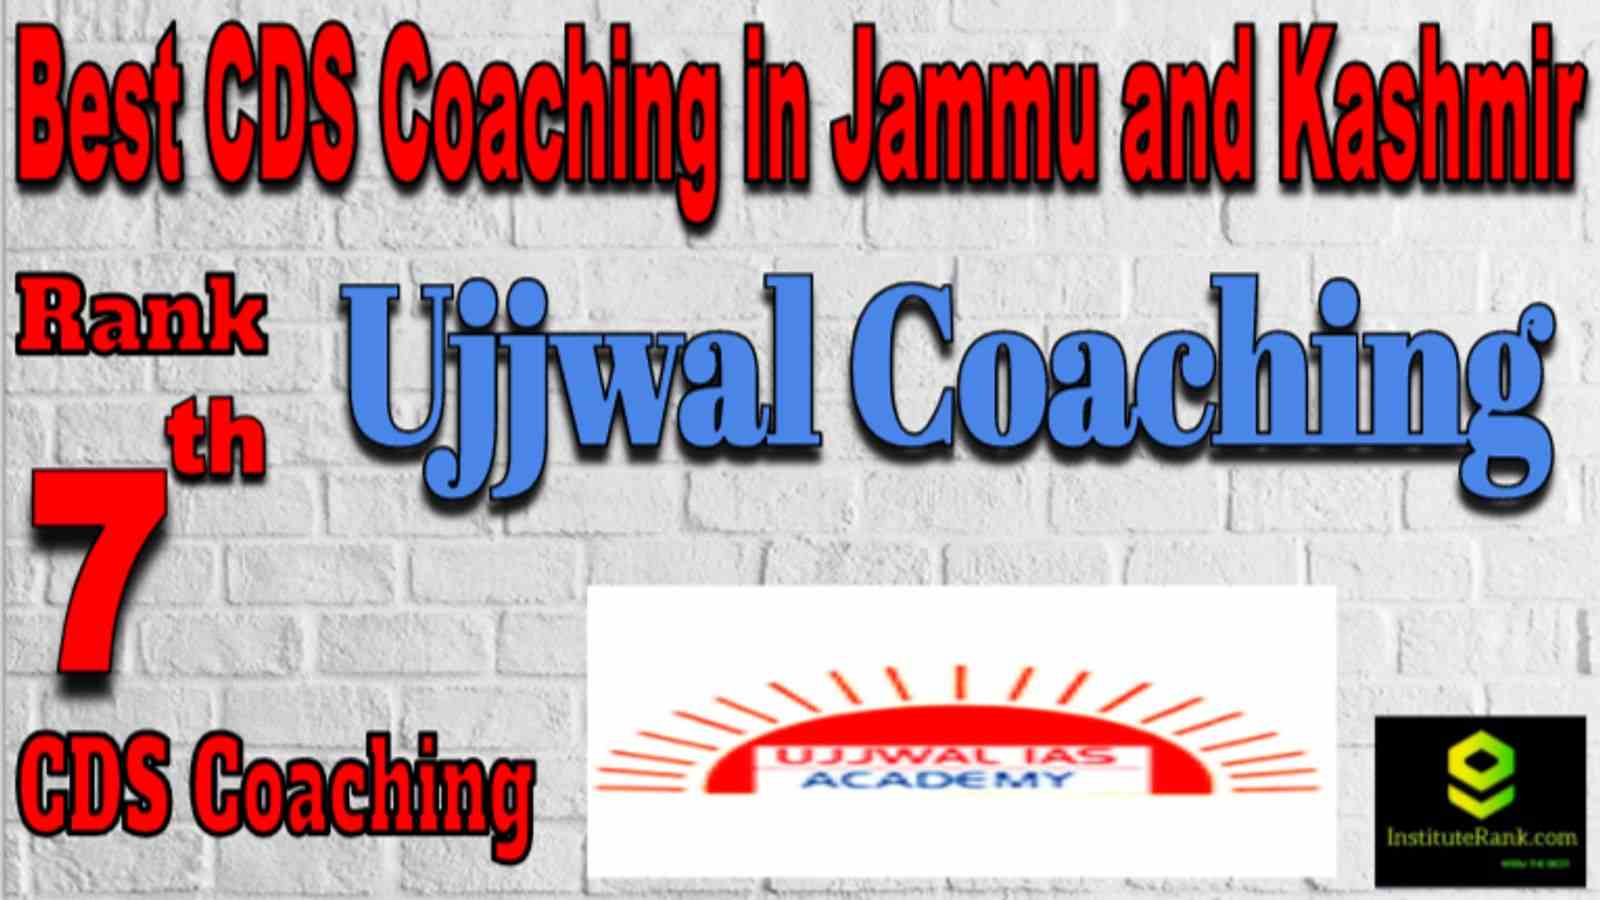 Rank 7 Best CDS Coaching in Jammu and Kashmir